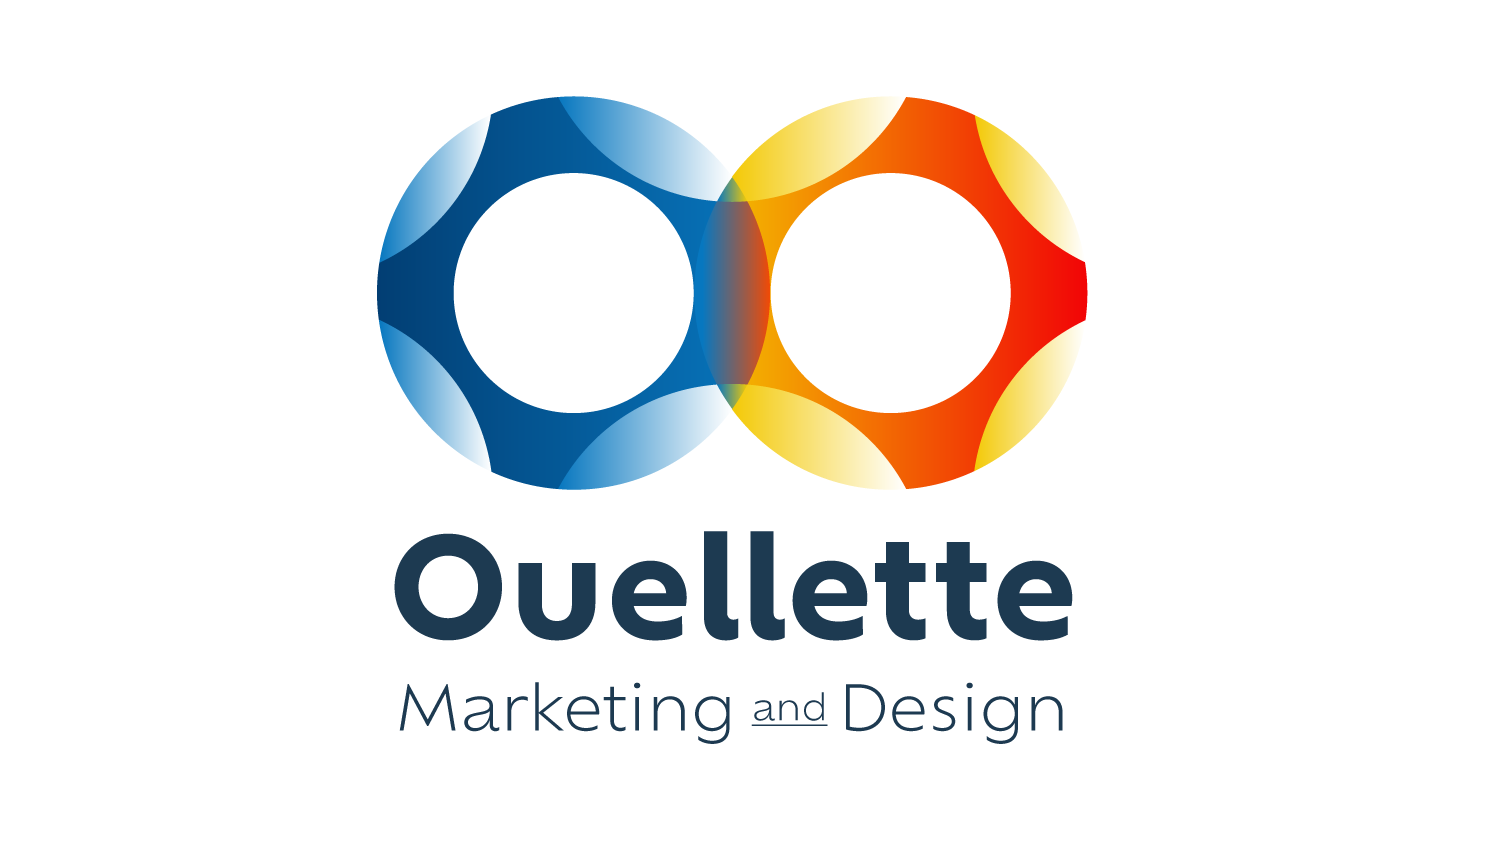 Ouellette Marketing and Design